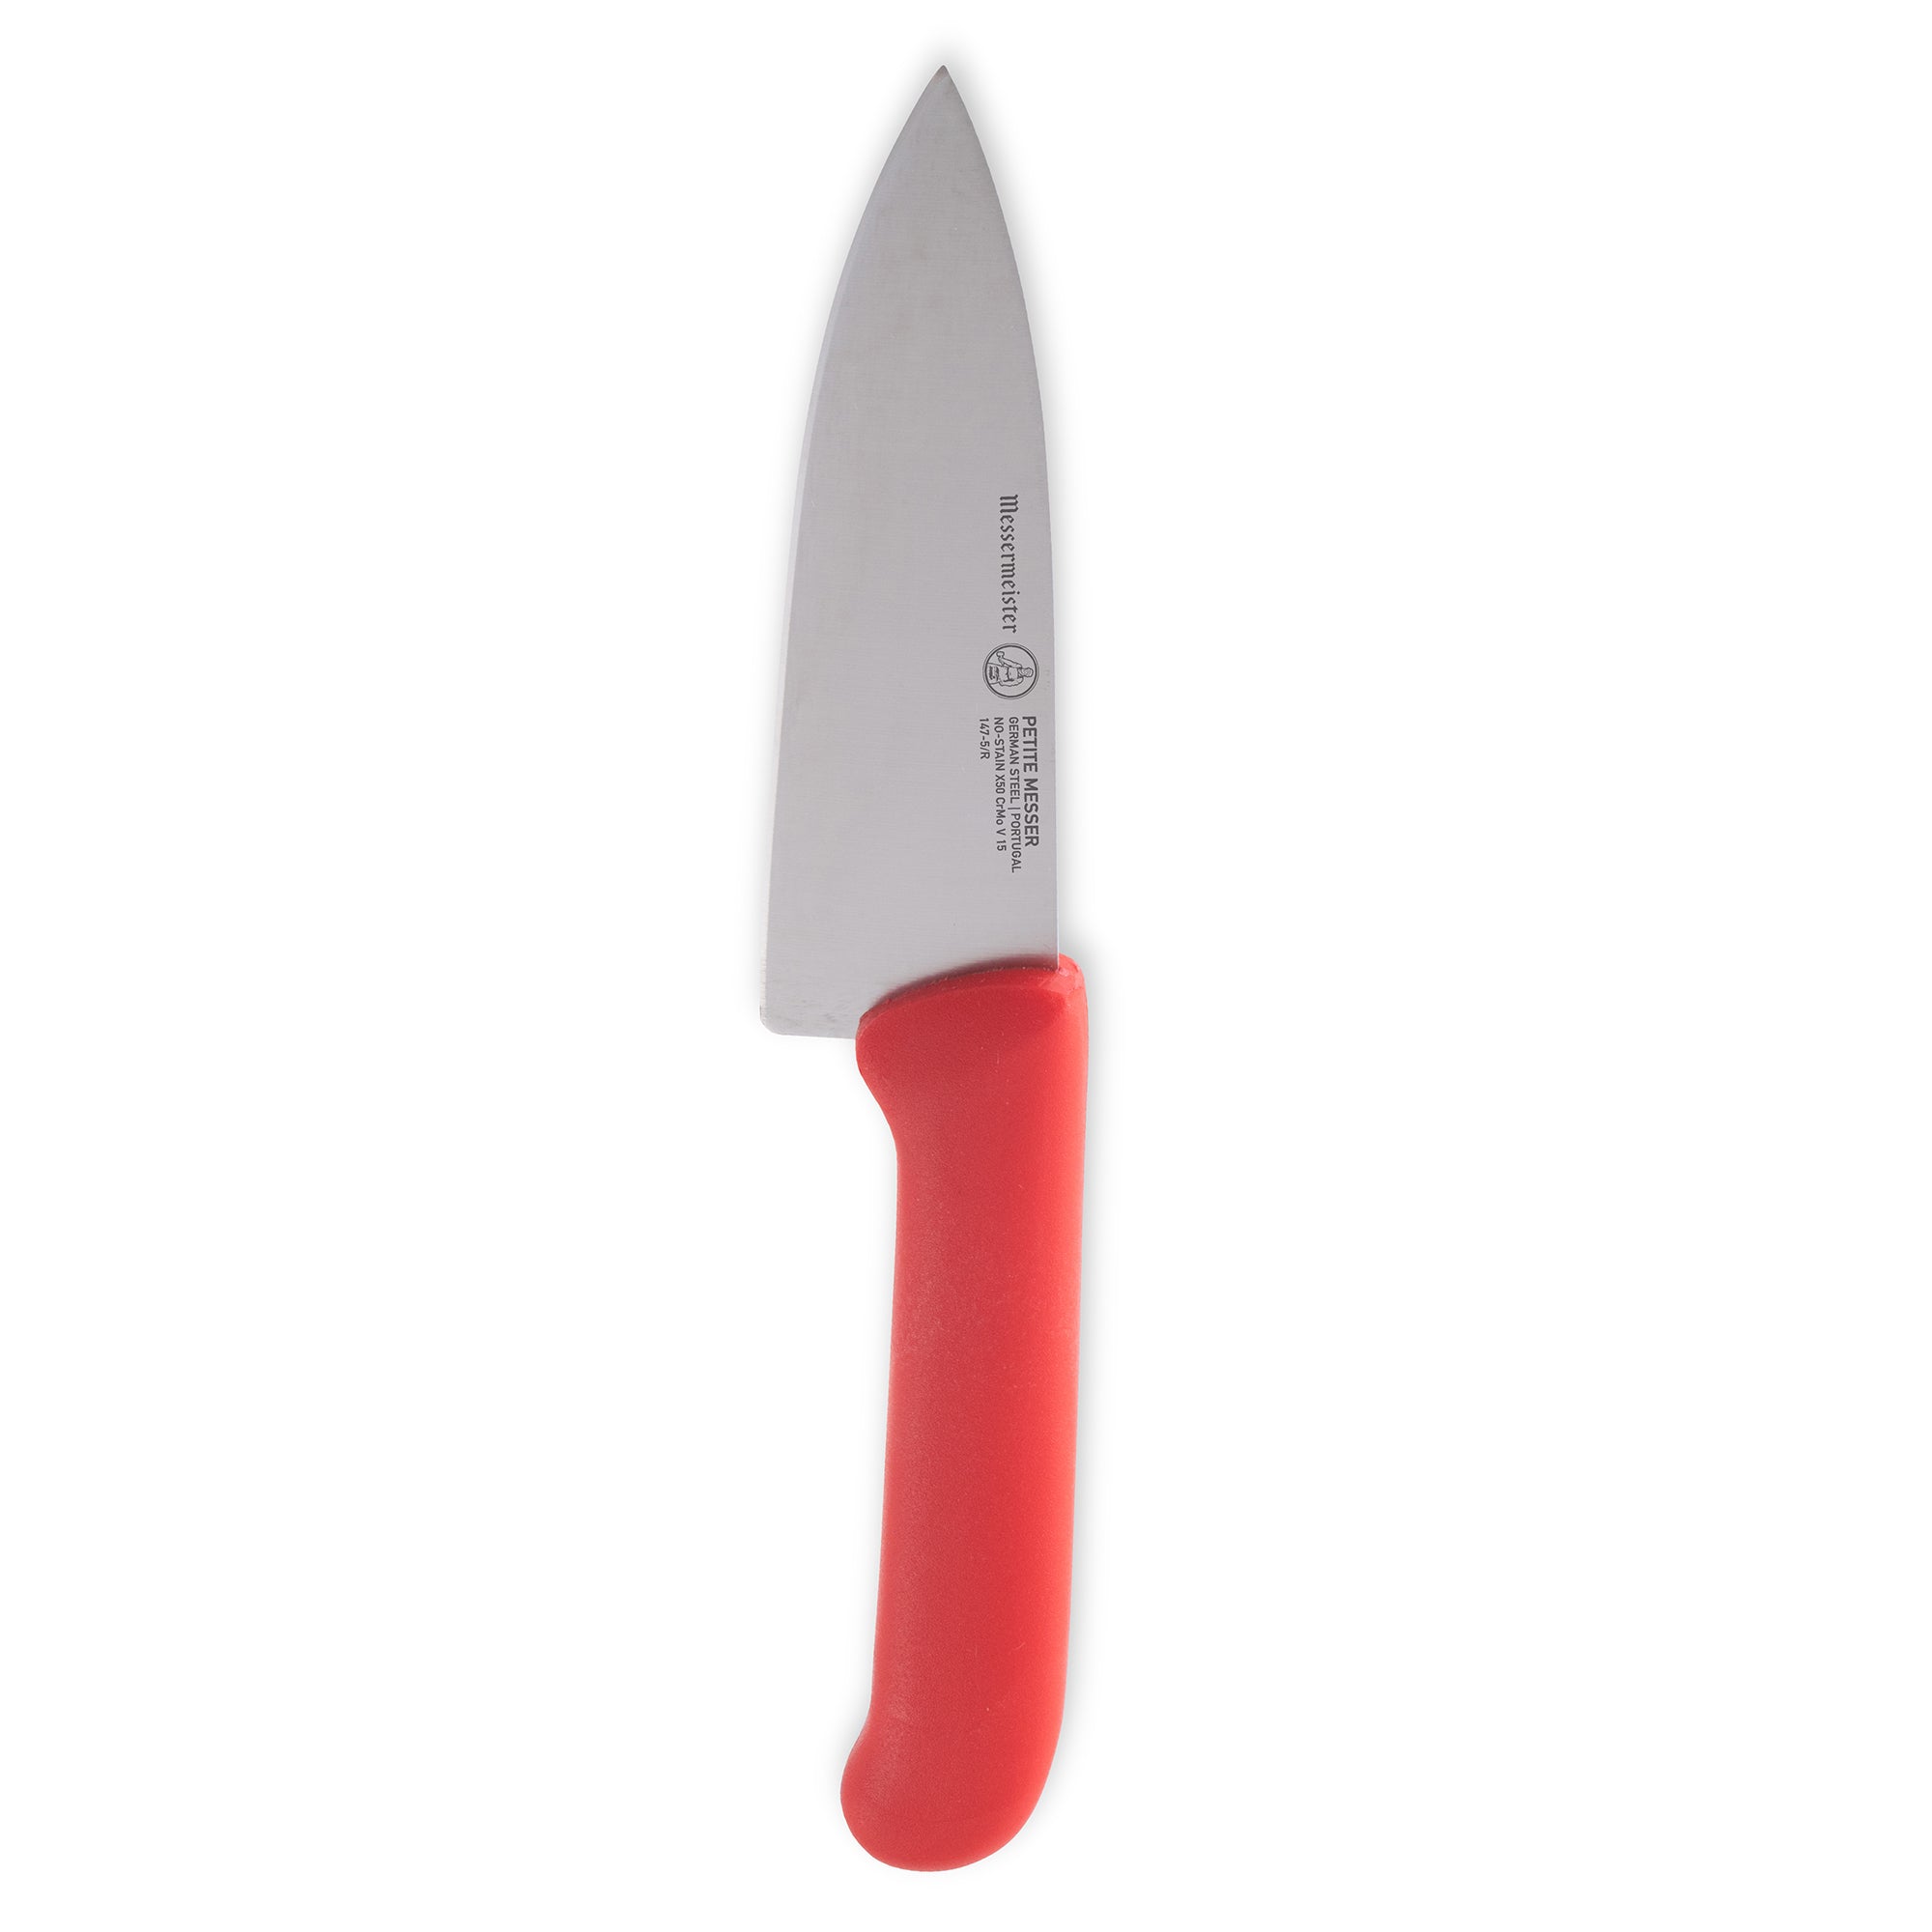 Buy Messermeister Petite Messer Kullenschliff Santoku Knife, 5-Inch, Green  Online at Low Prices in India 